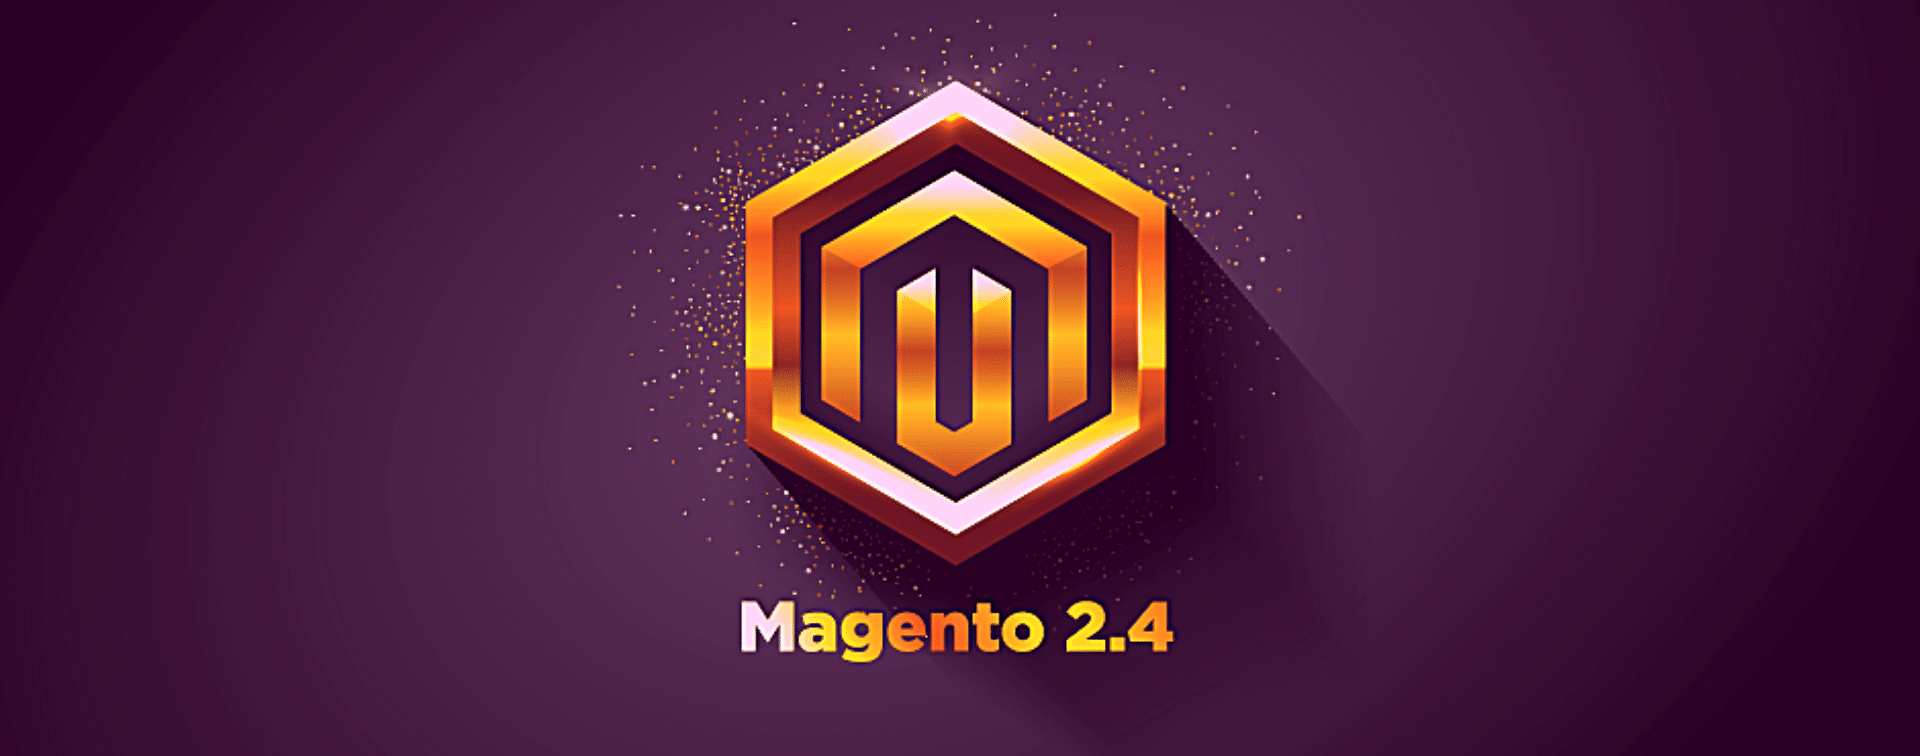 Magento-2.4-SevenWebePower